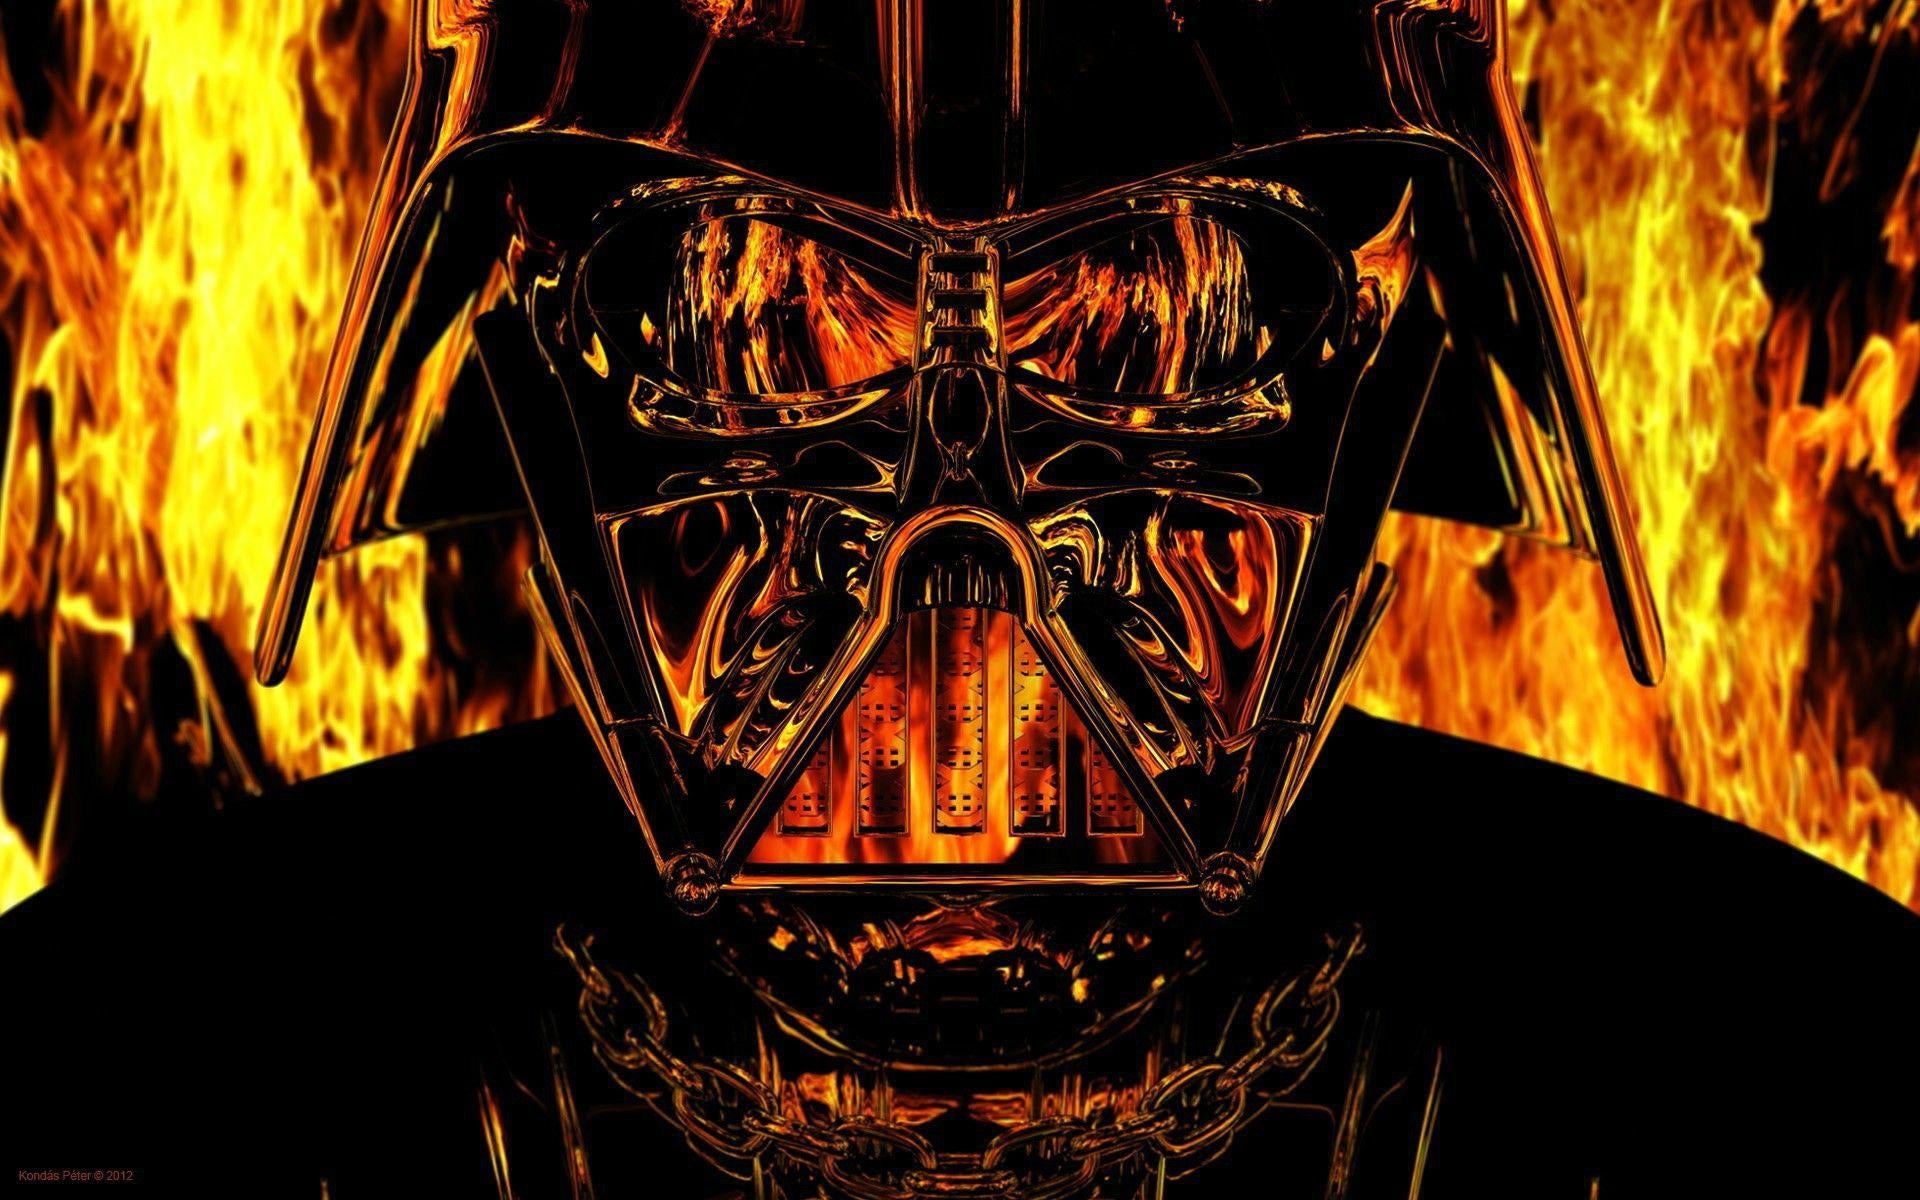 Wallpaper Cool Star Wars Darth Vader ObiWan Kenobi Star Wars Death  Star Background  Download Free Image